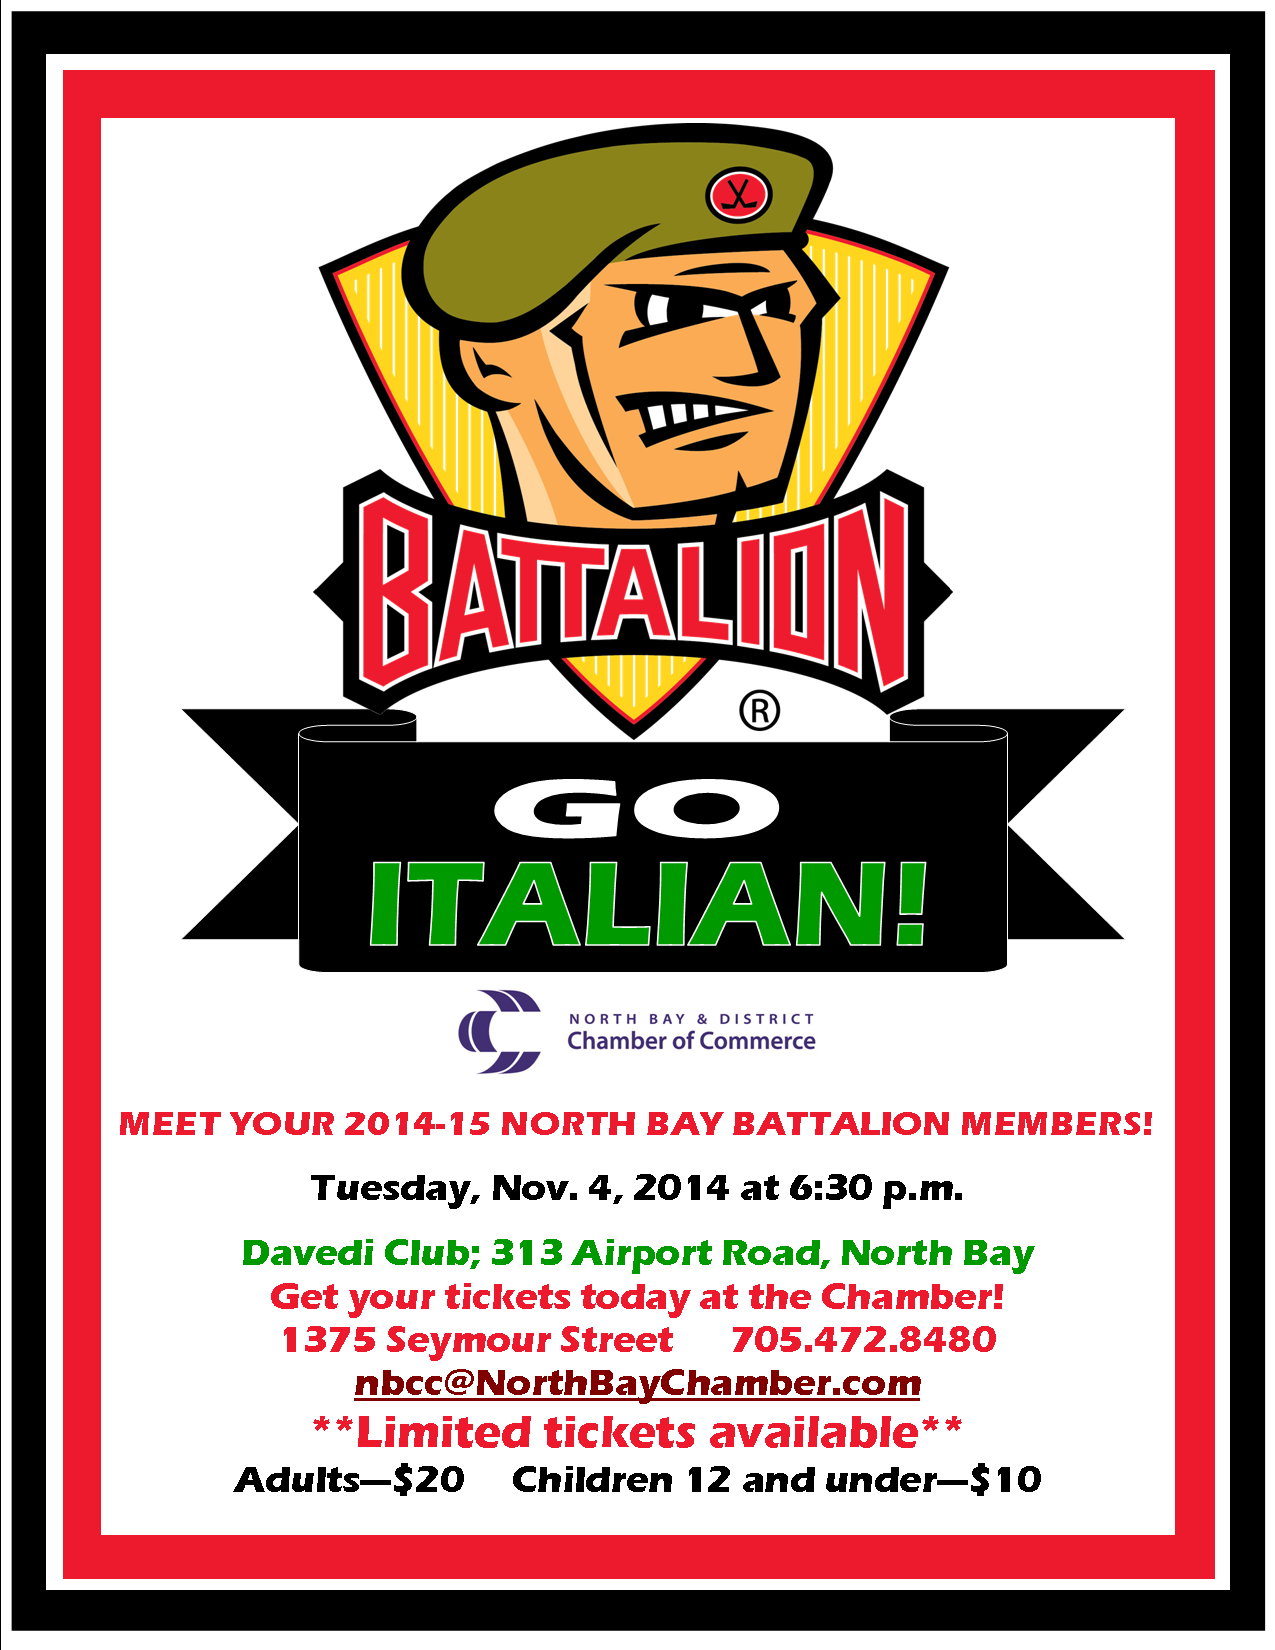 Battalion go Italian